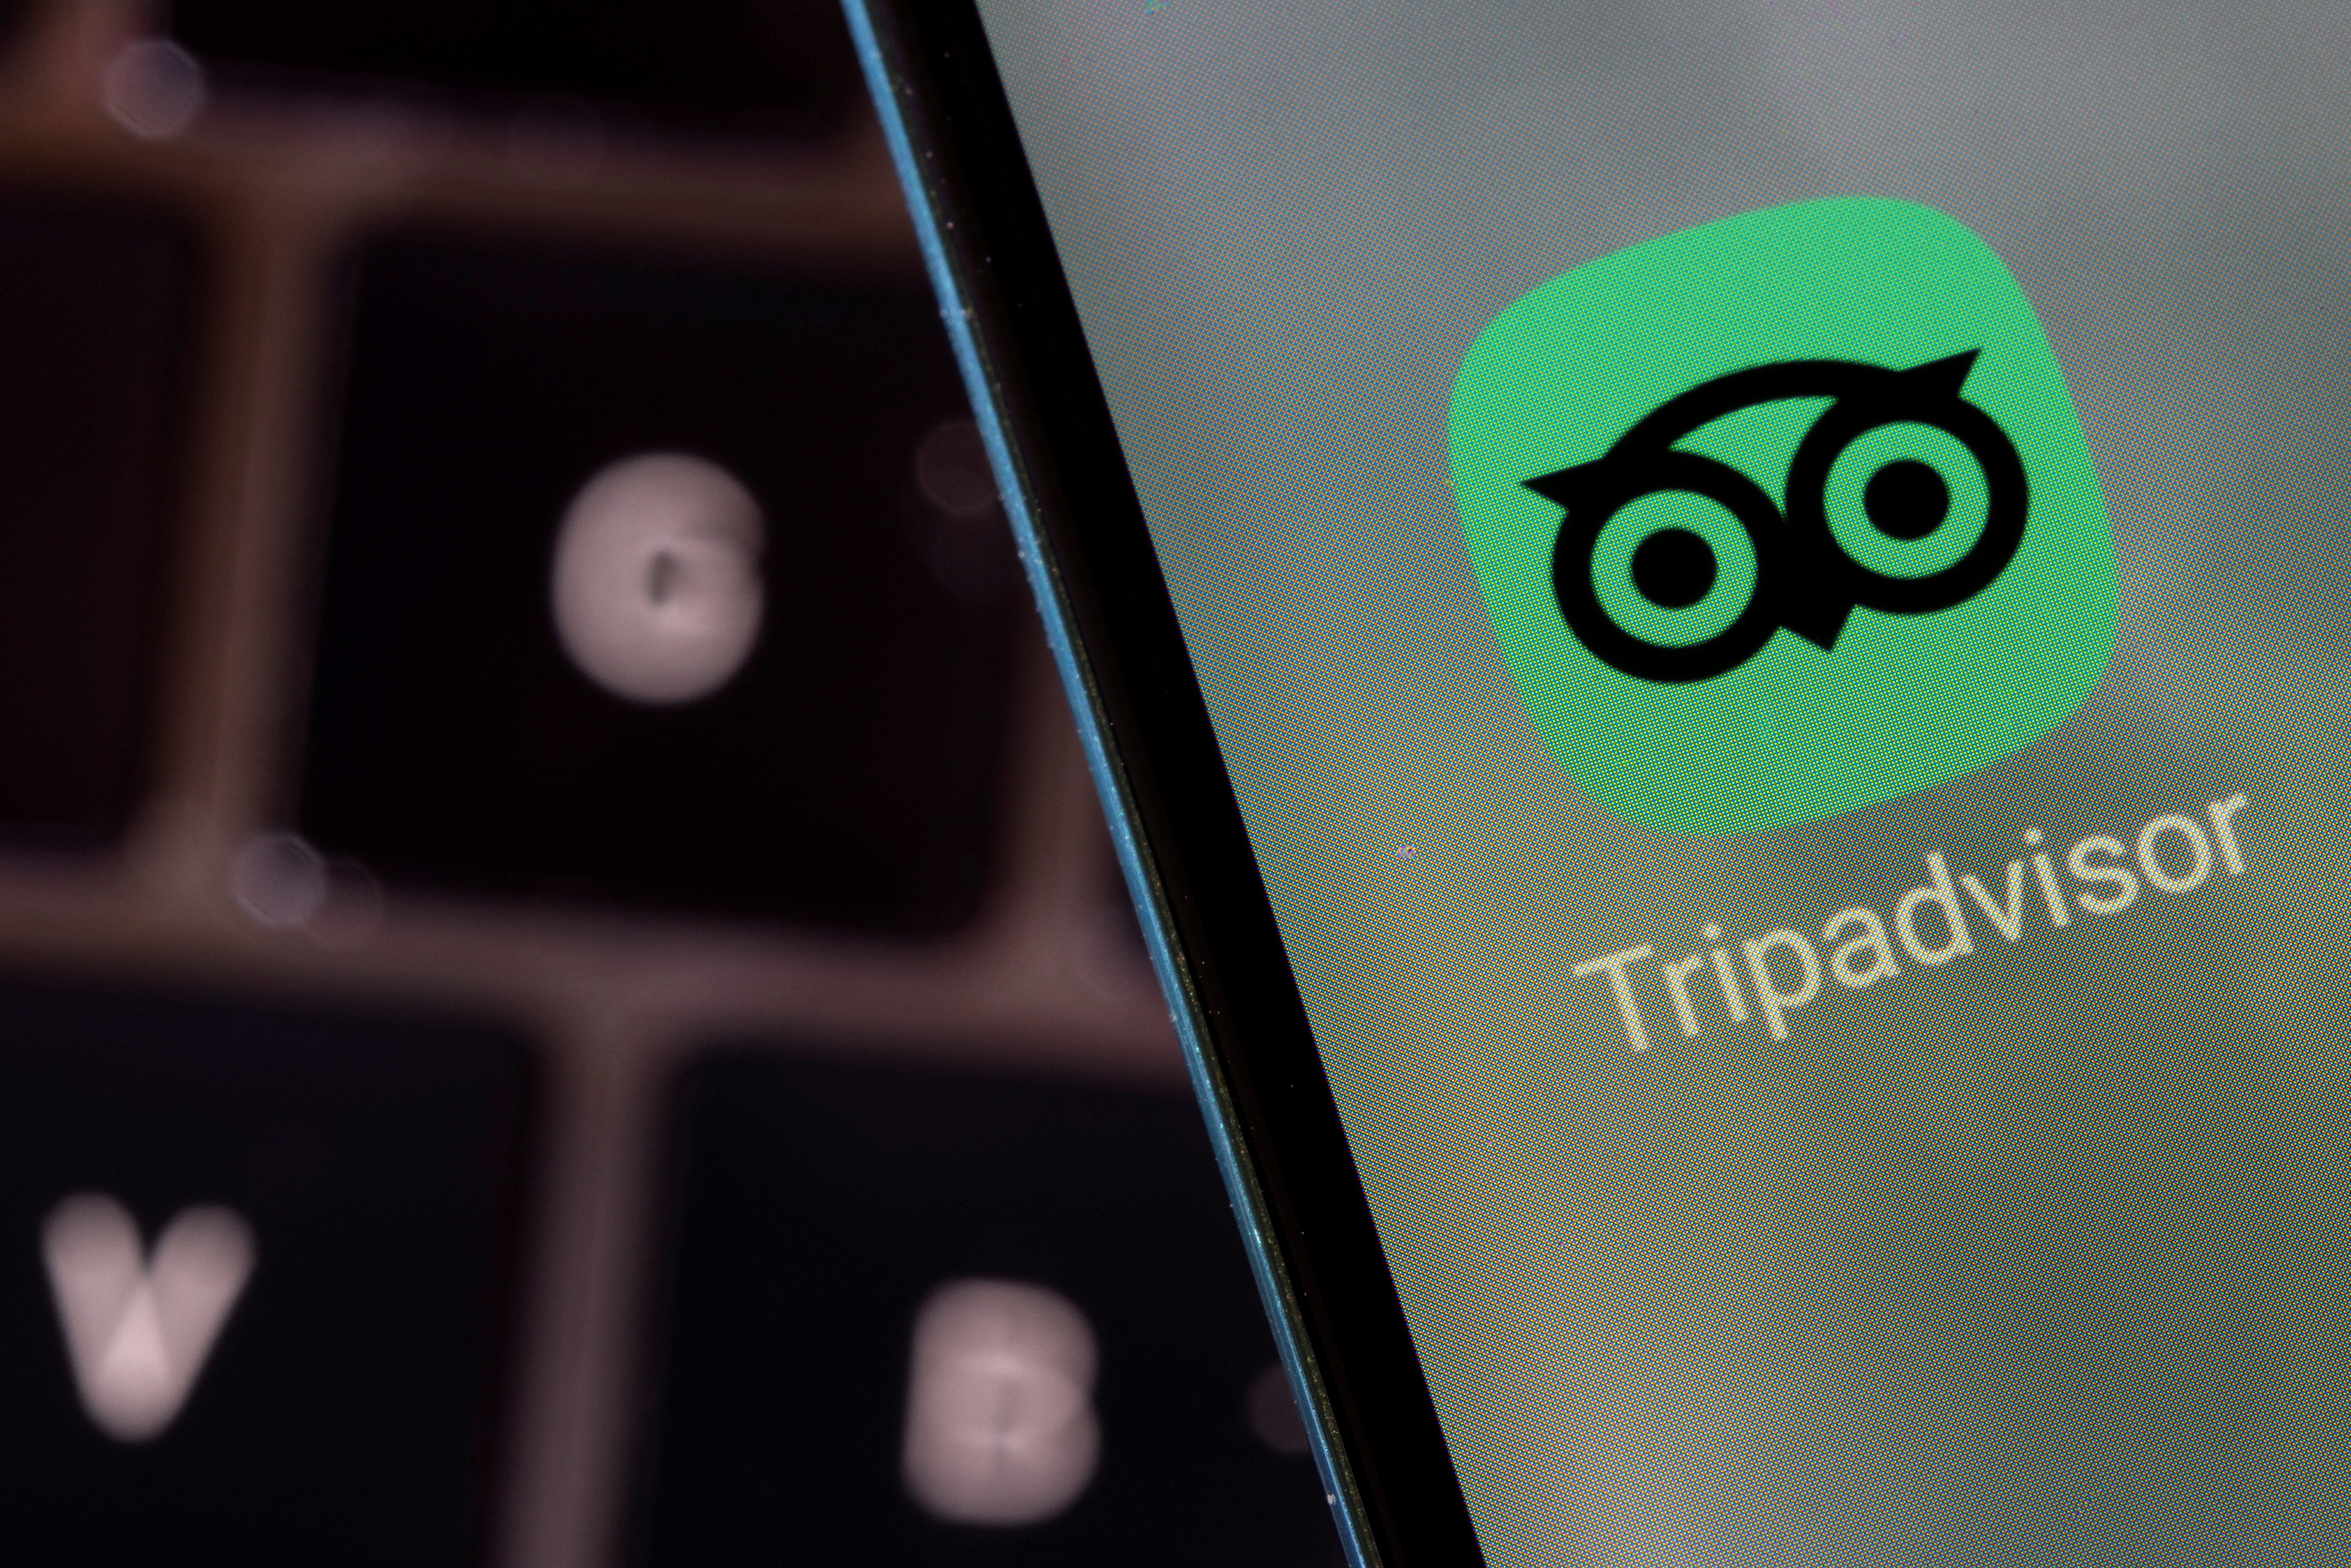 Illustration shows Tripadvisor app